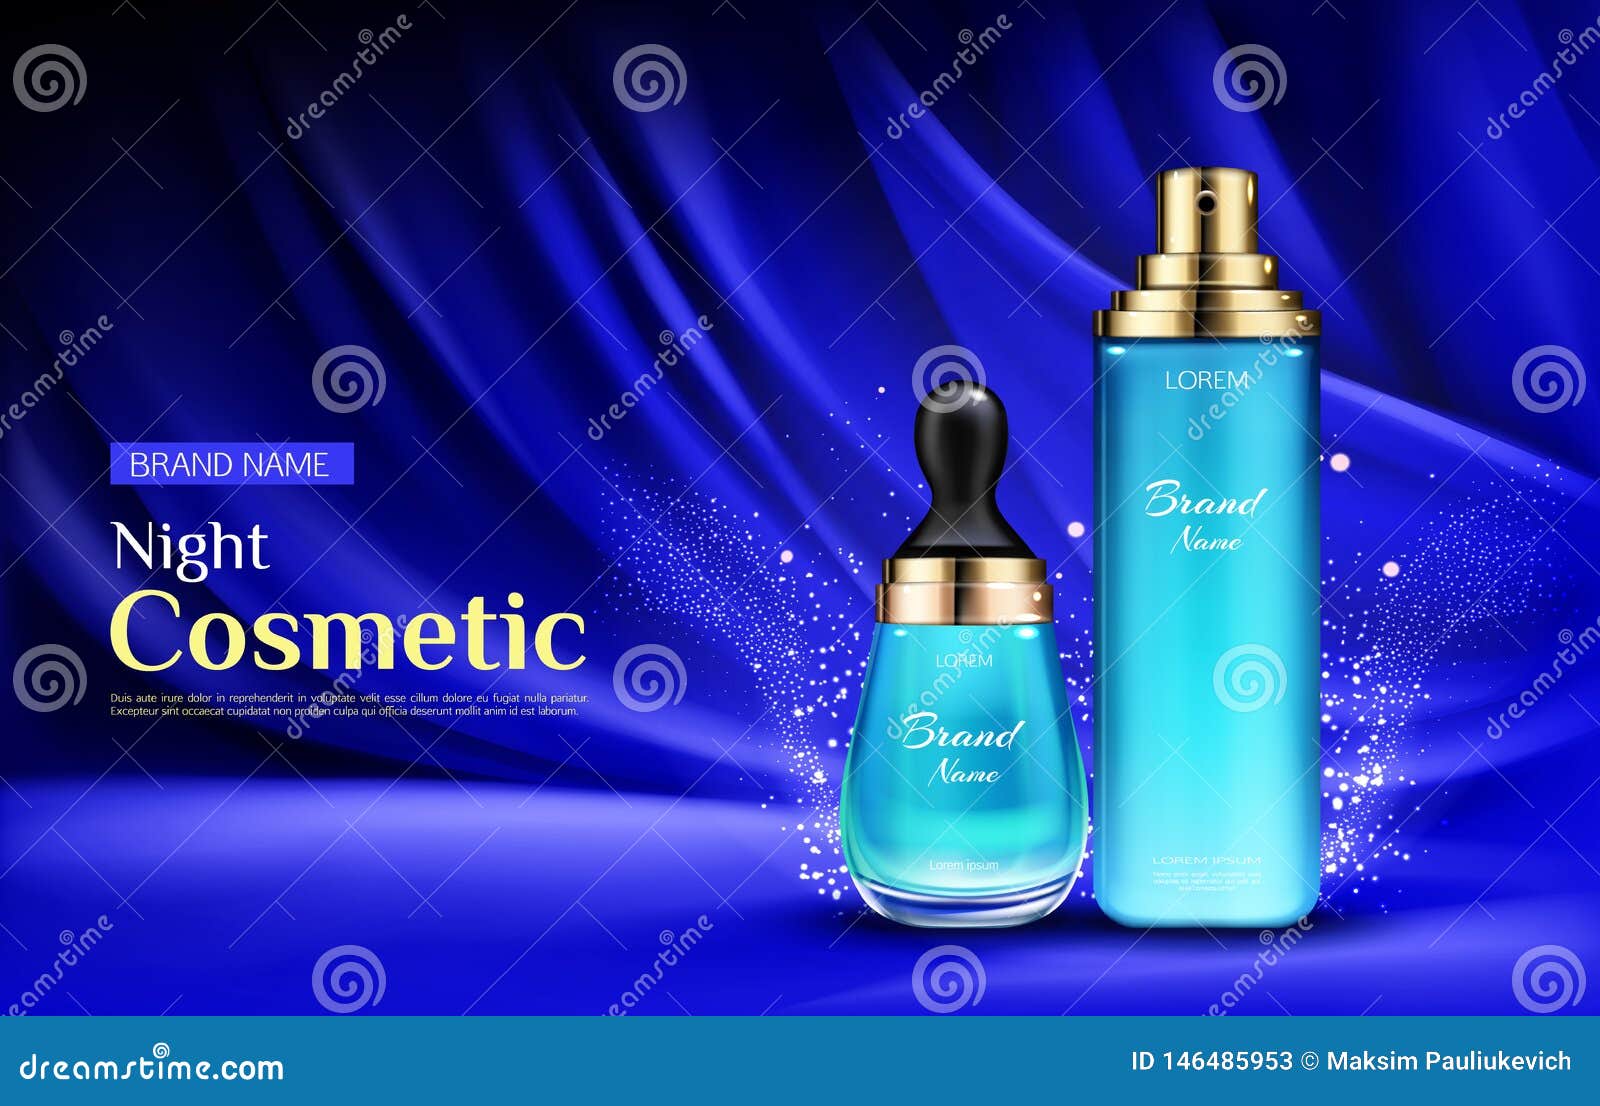 night cosmetic beauty cream bottles ad banner